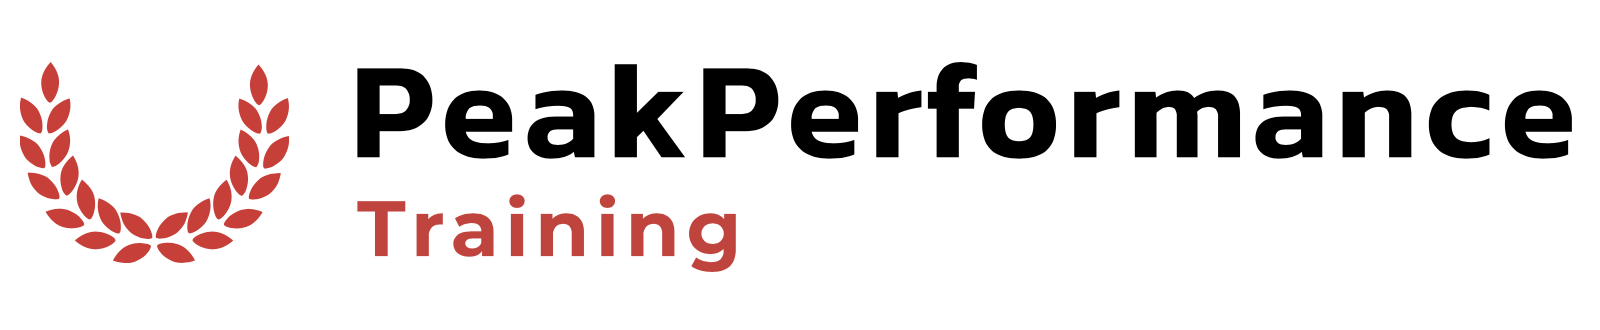 Peak Performance Training logo